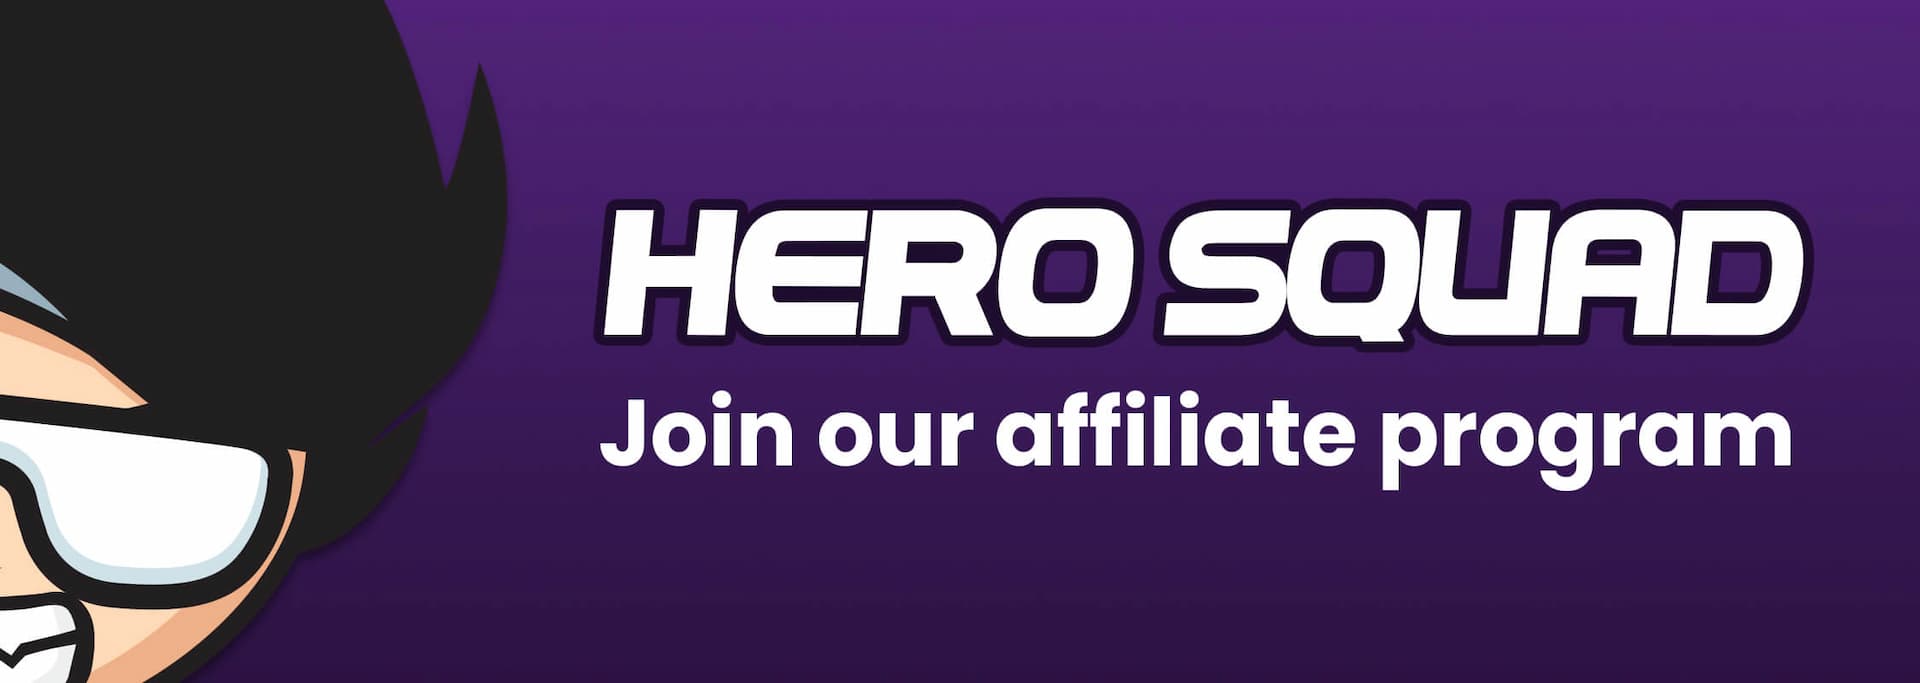 Hero Squad header image